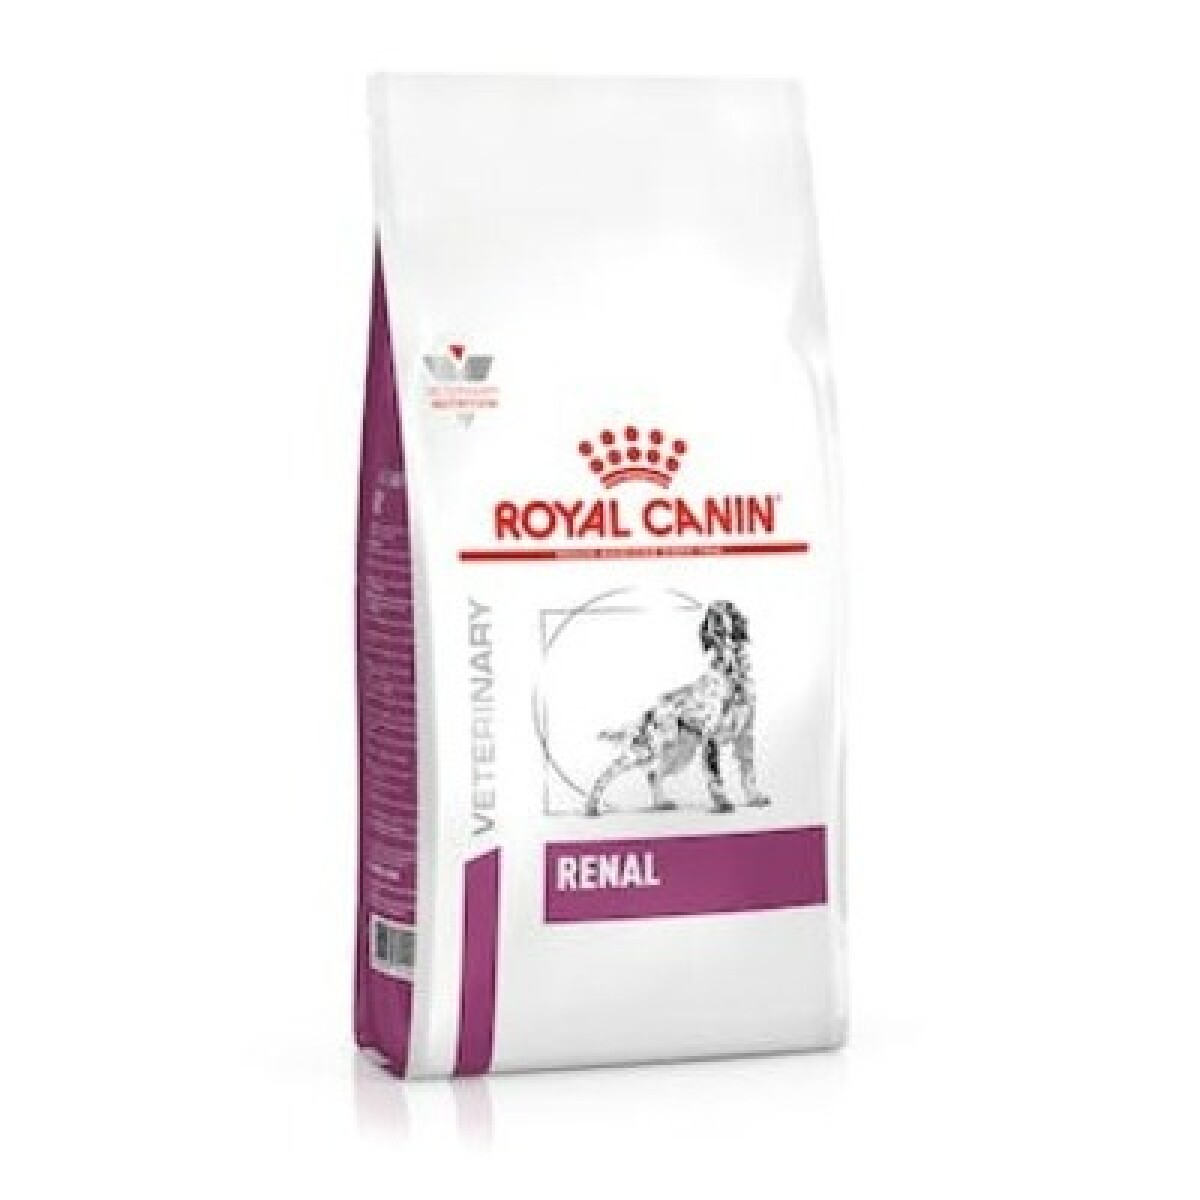 ROYAL CANIN RENAL DOG 1,5 KG - Unica 